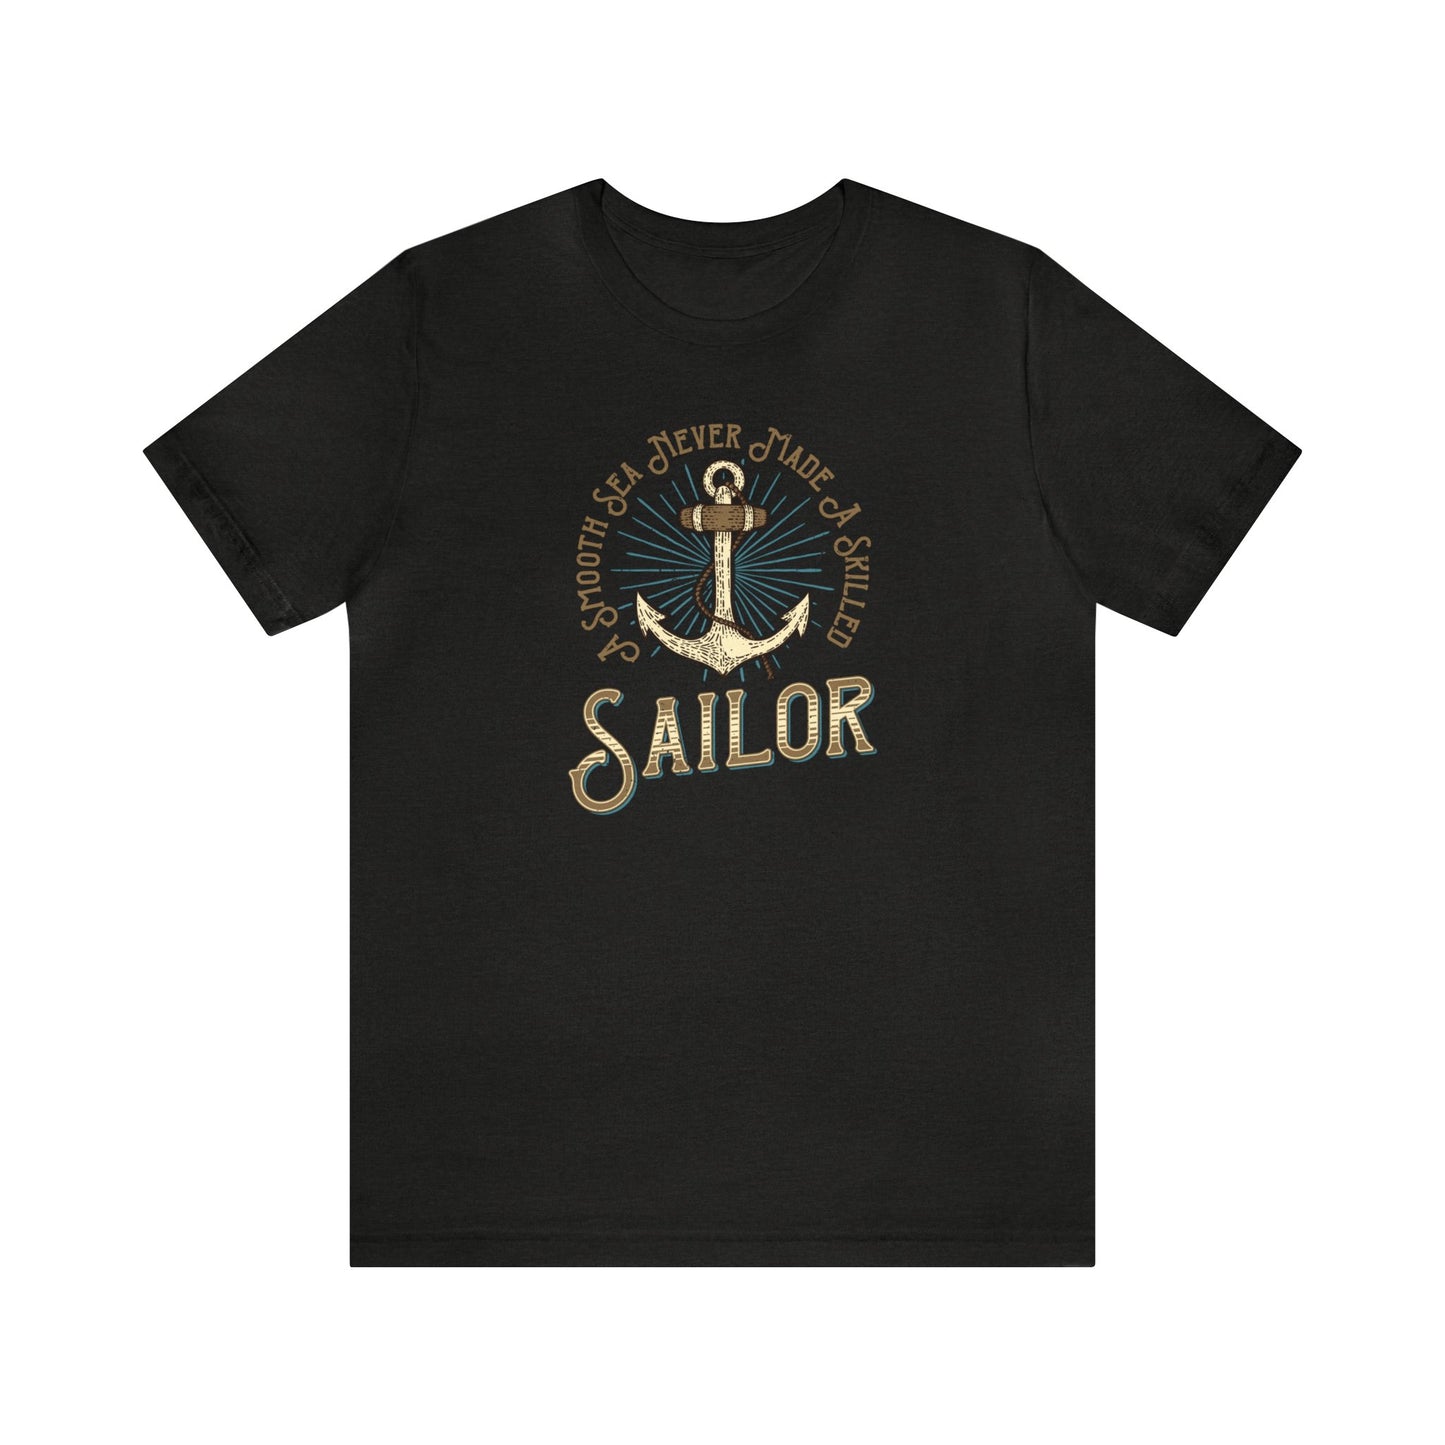 A Smooth Sea Never Made A Skilled Sailor